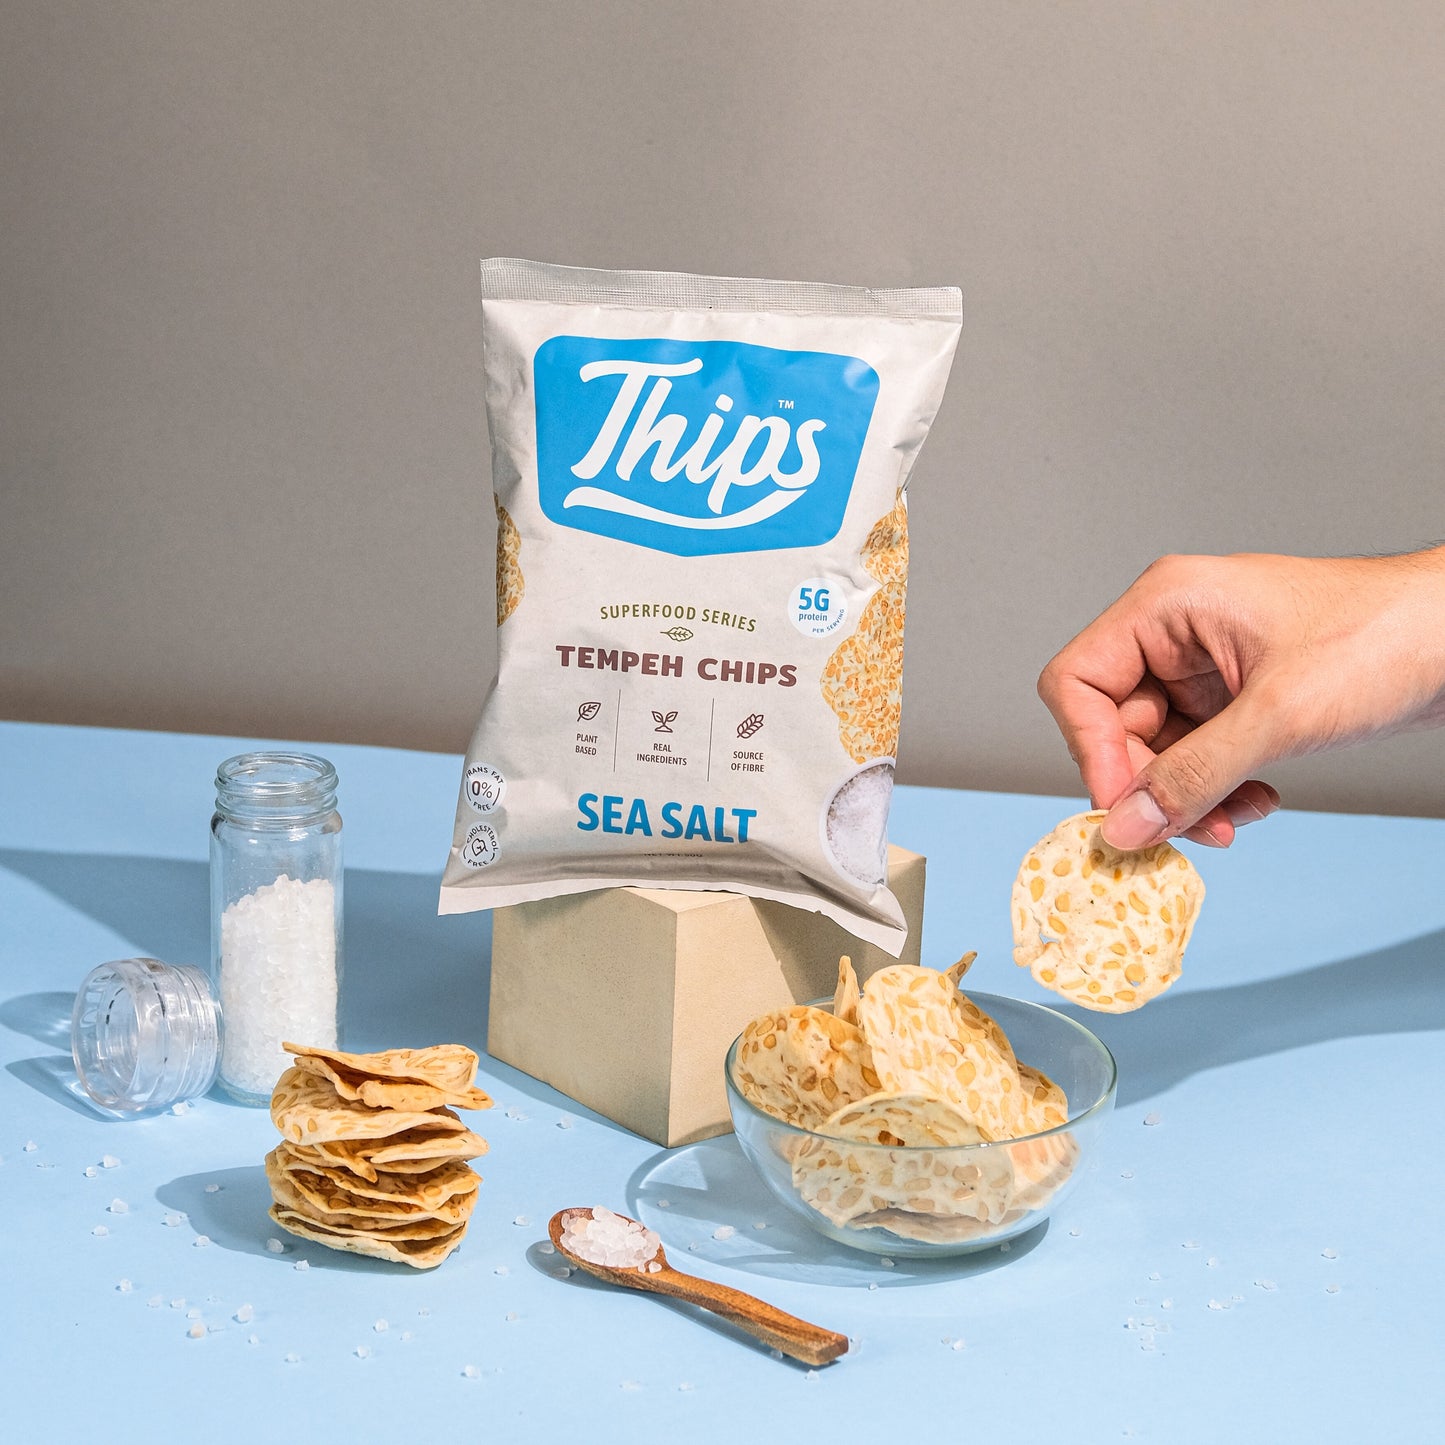 [Subscription Plan- Bundle of 24] Thips Sea Salt Tempeh Chips